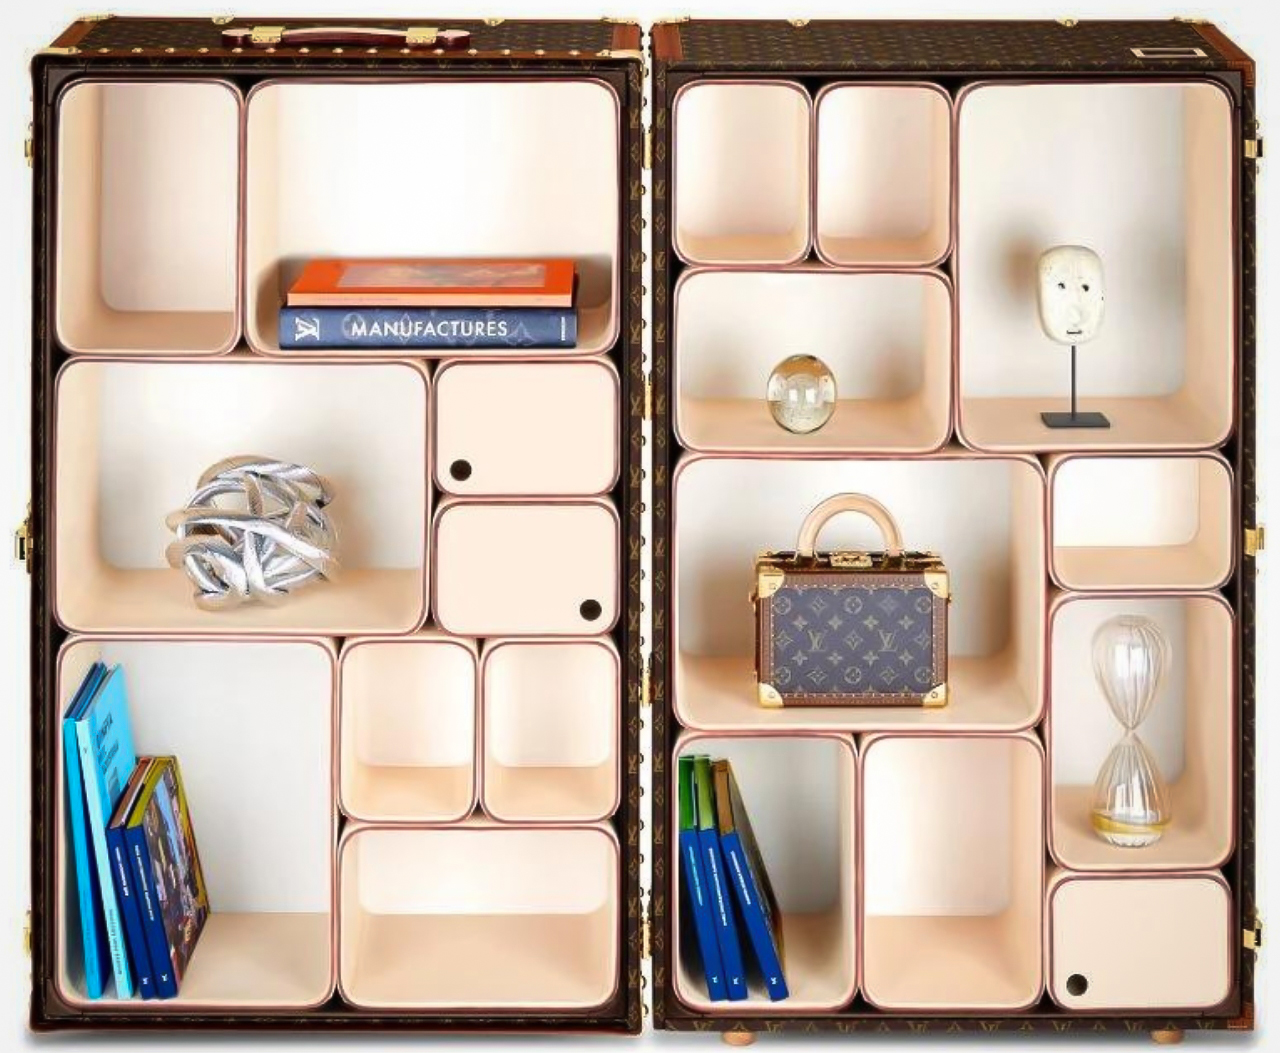 Marc Newson's Cabinet of Curiosities turns Louis Vuitton trunk into display  shelves - Yanko Design